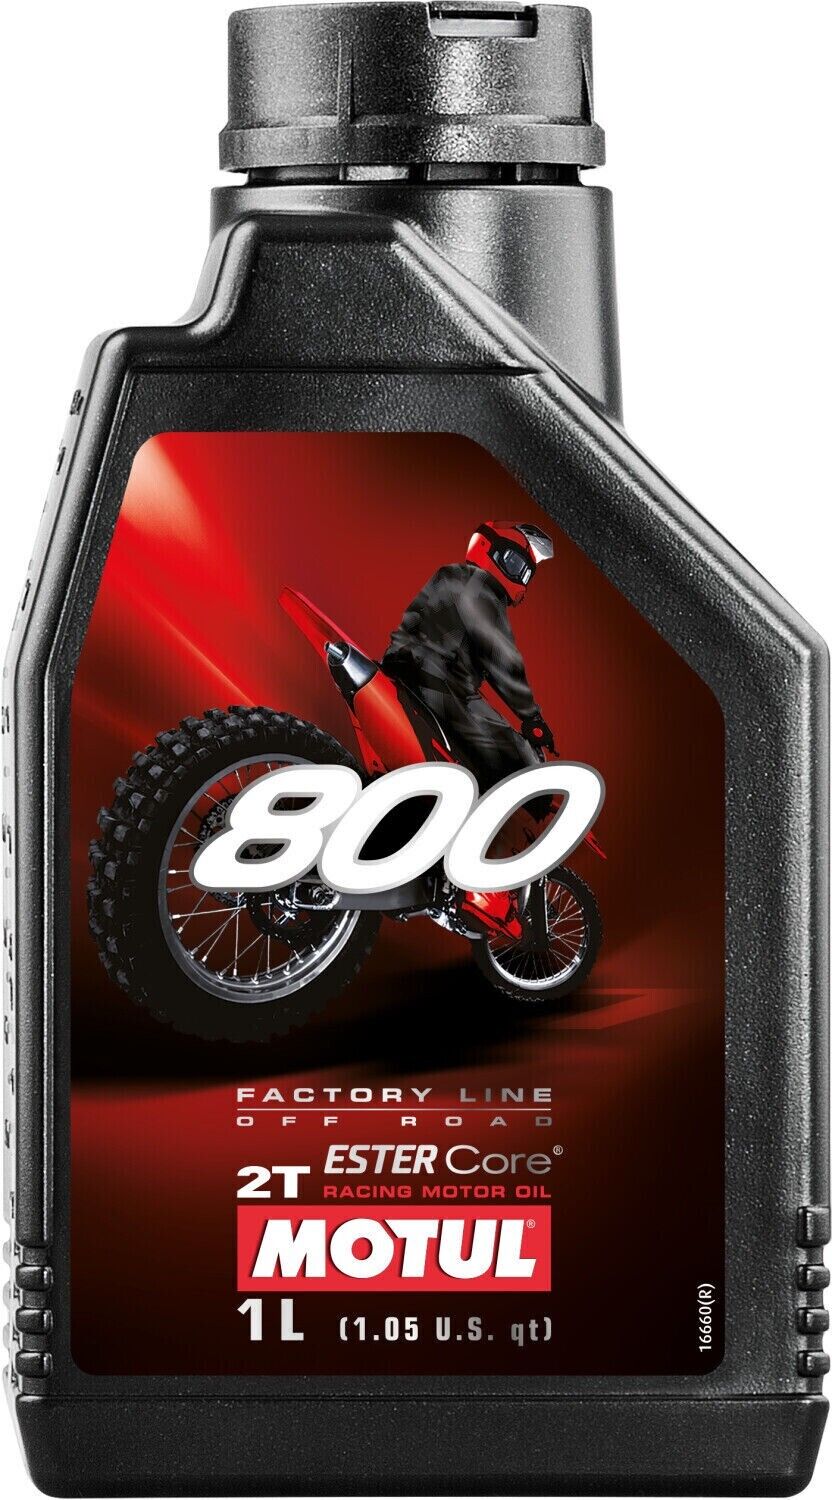 MOTUL 800 2T Factory Line Off Road Motorcycle Oil